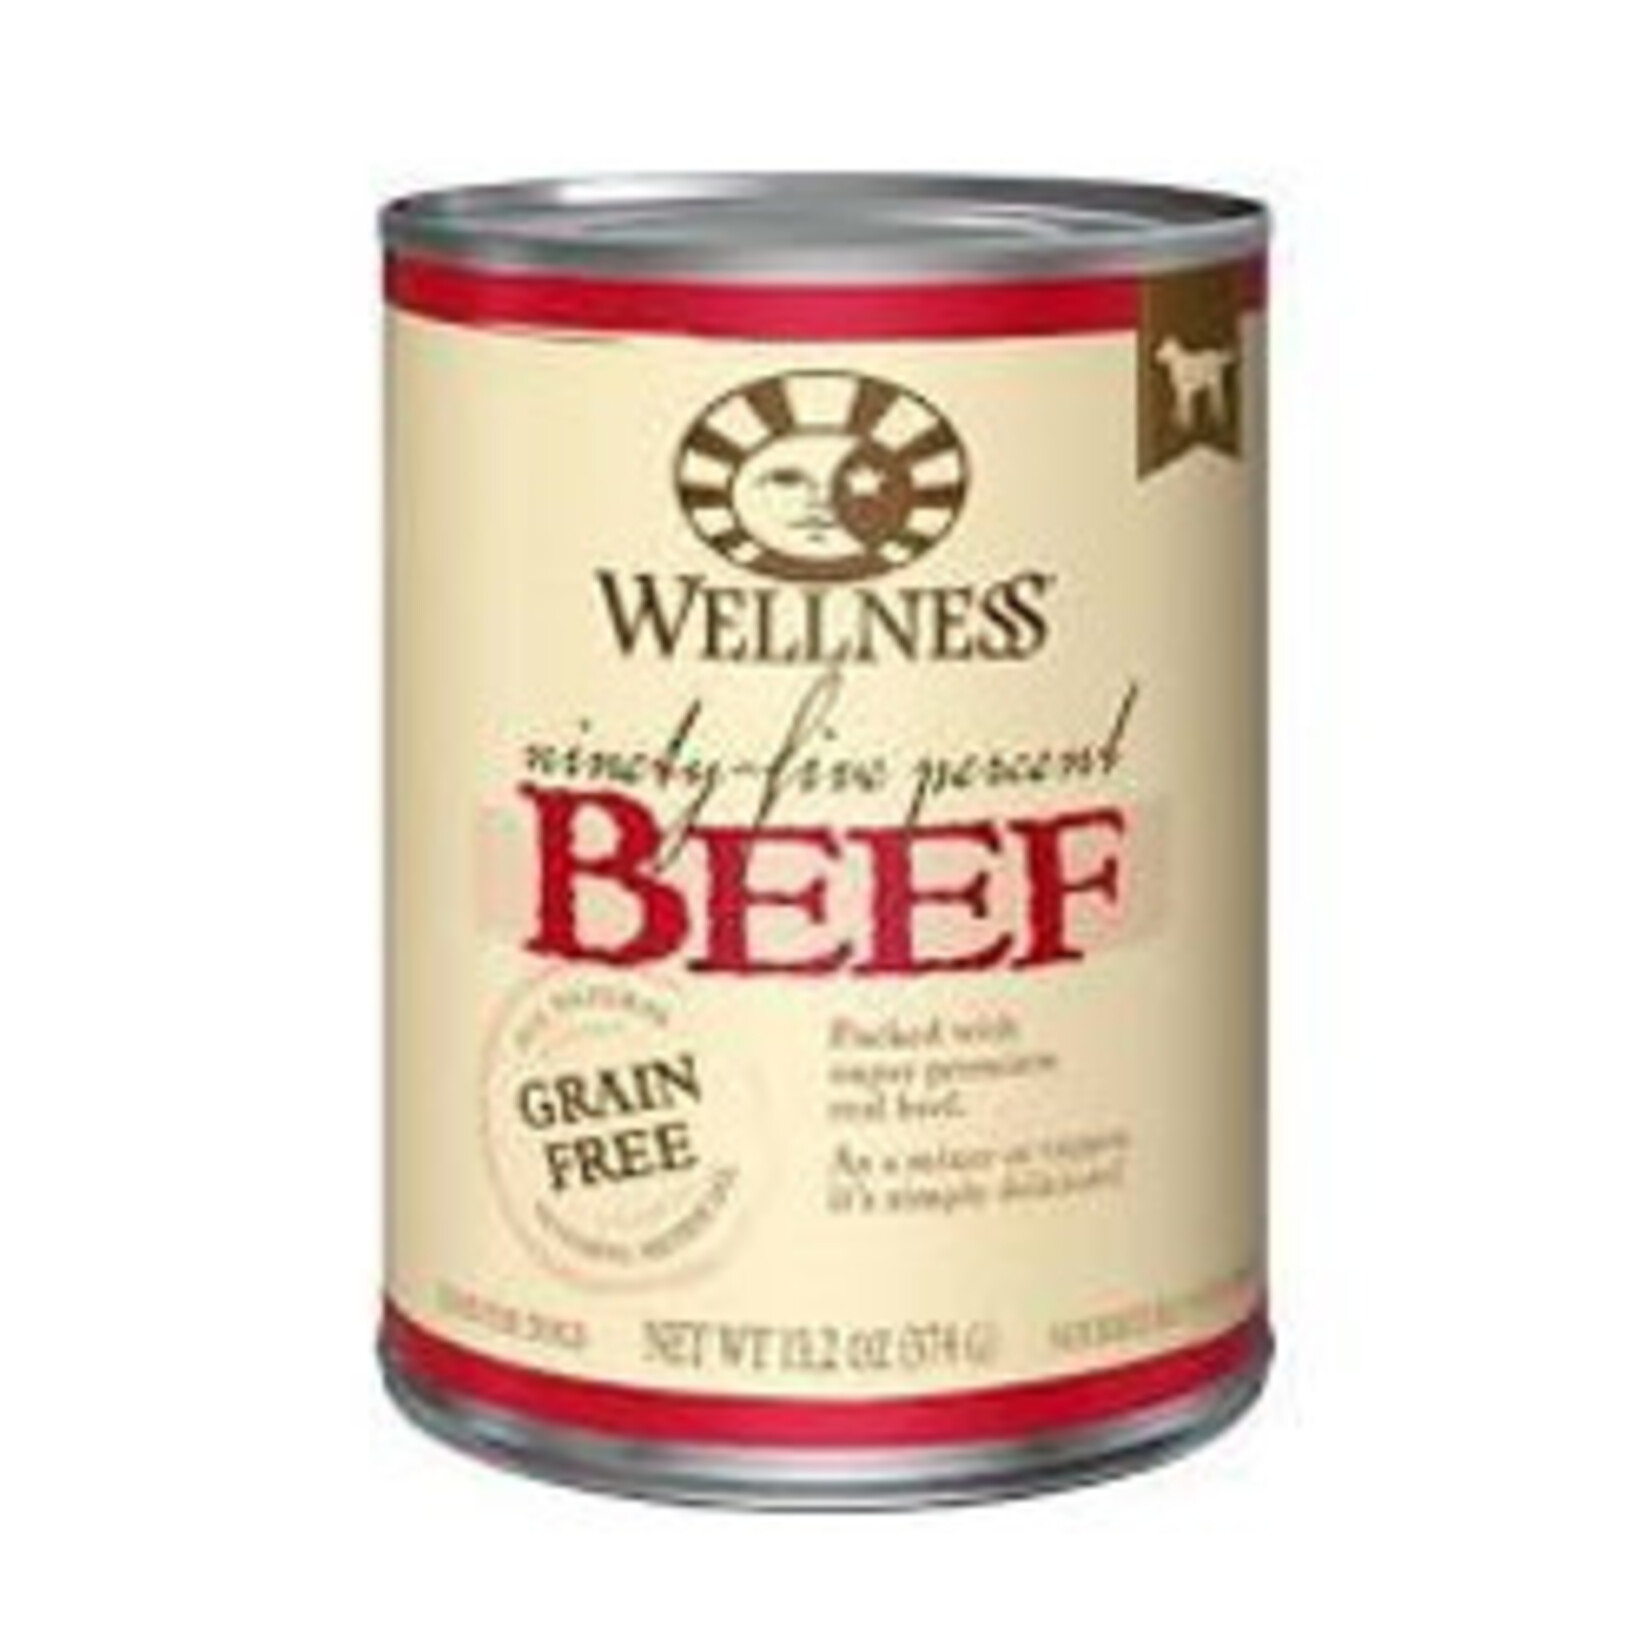 Wellness Wellness Grain Free 13.2oz 95% Canned Dog Food